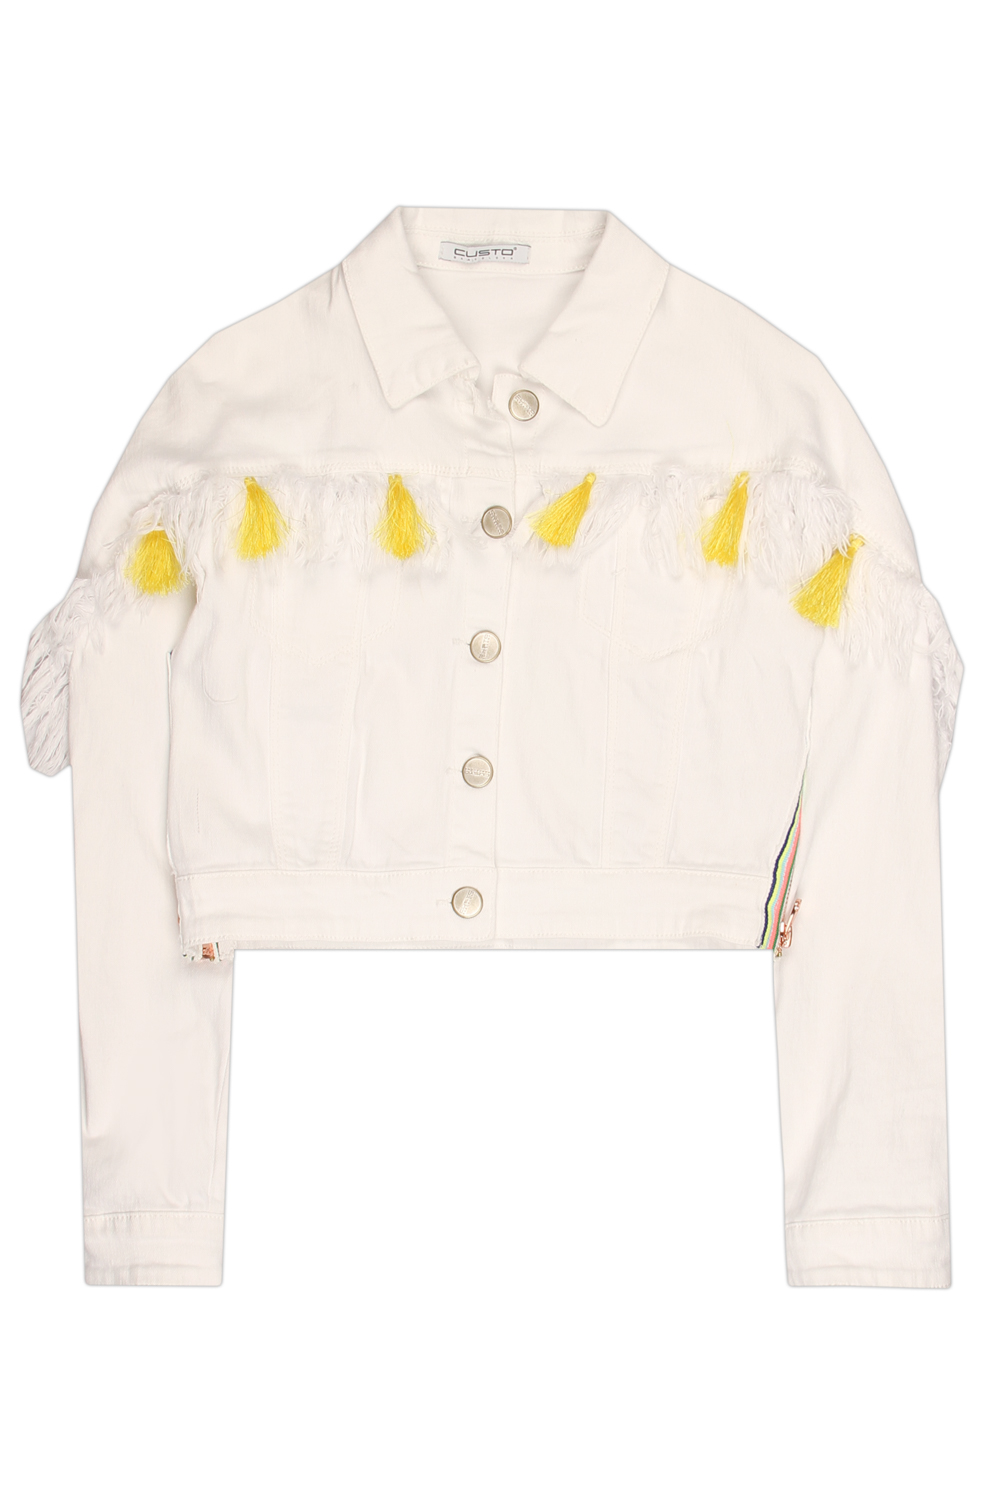 Куртка Custo Barcelona, размер 8, цвет белый CU212 - фото 1